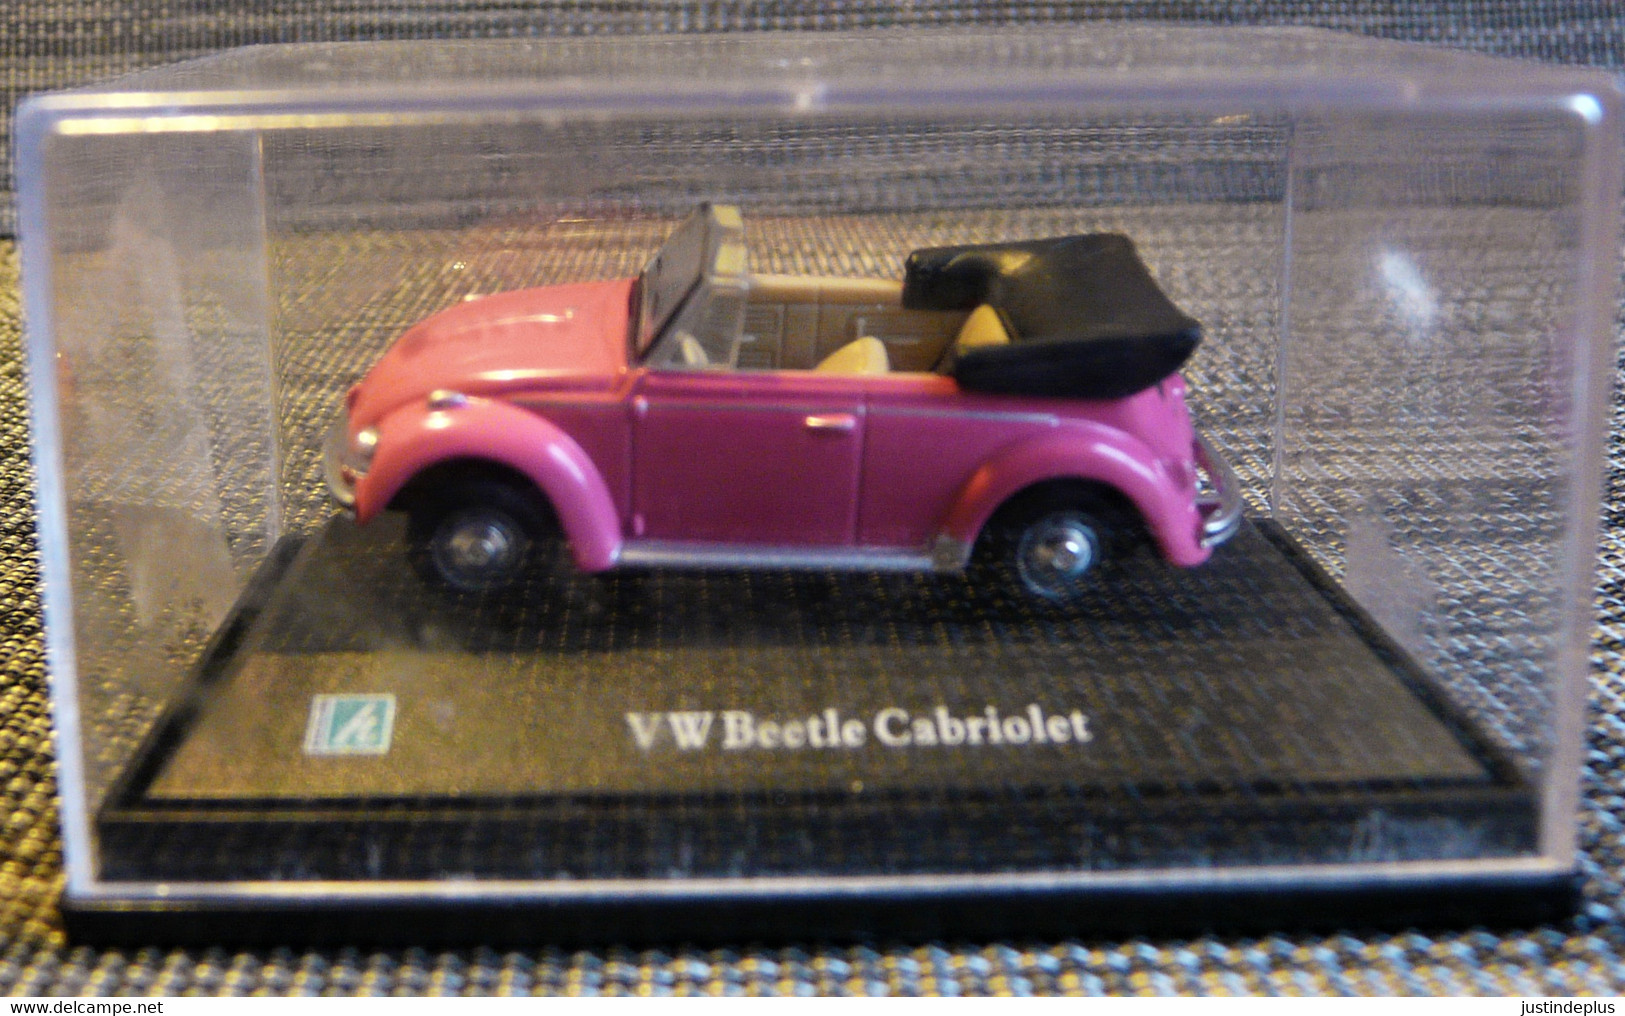 VW BEETLE CABRIOLET ROSE WOLKSVAGEN COCCINELLE ECHELLE 1/72EME - Scale 1:72